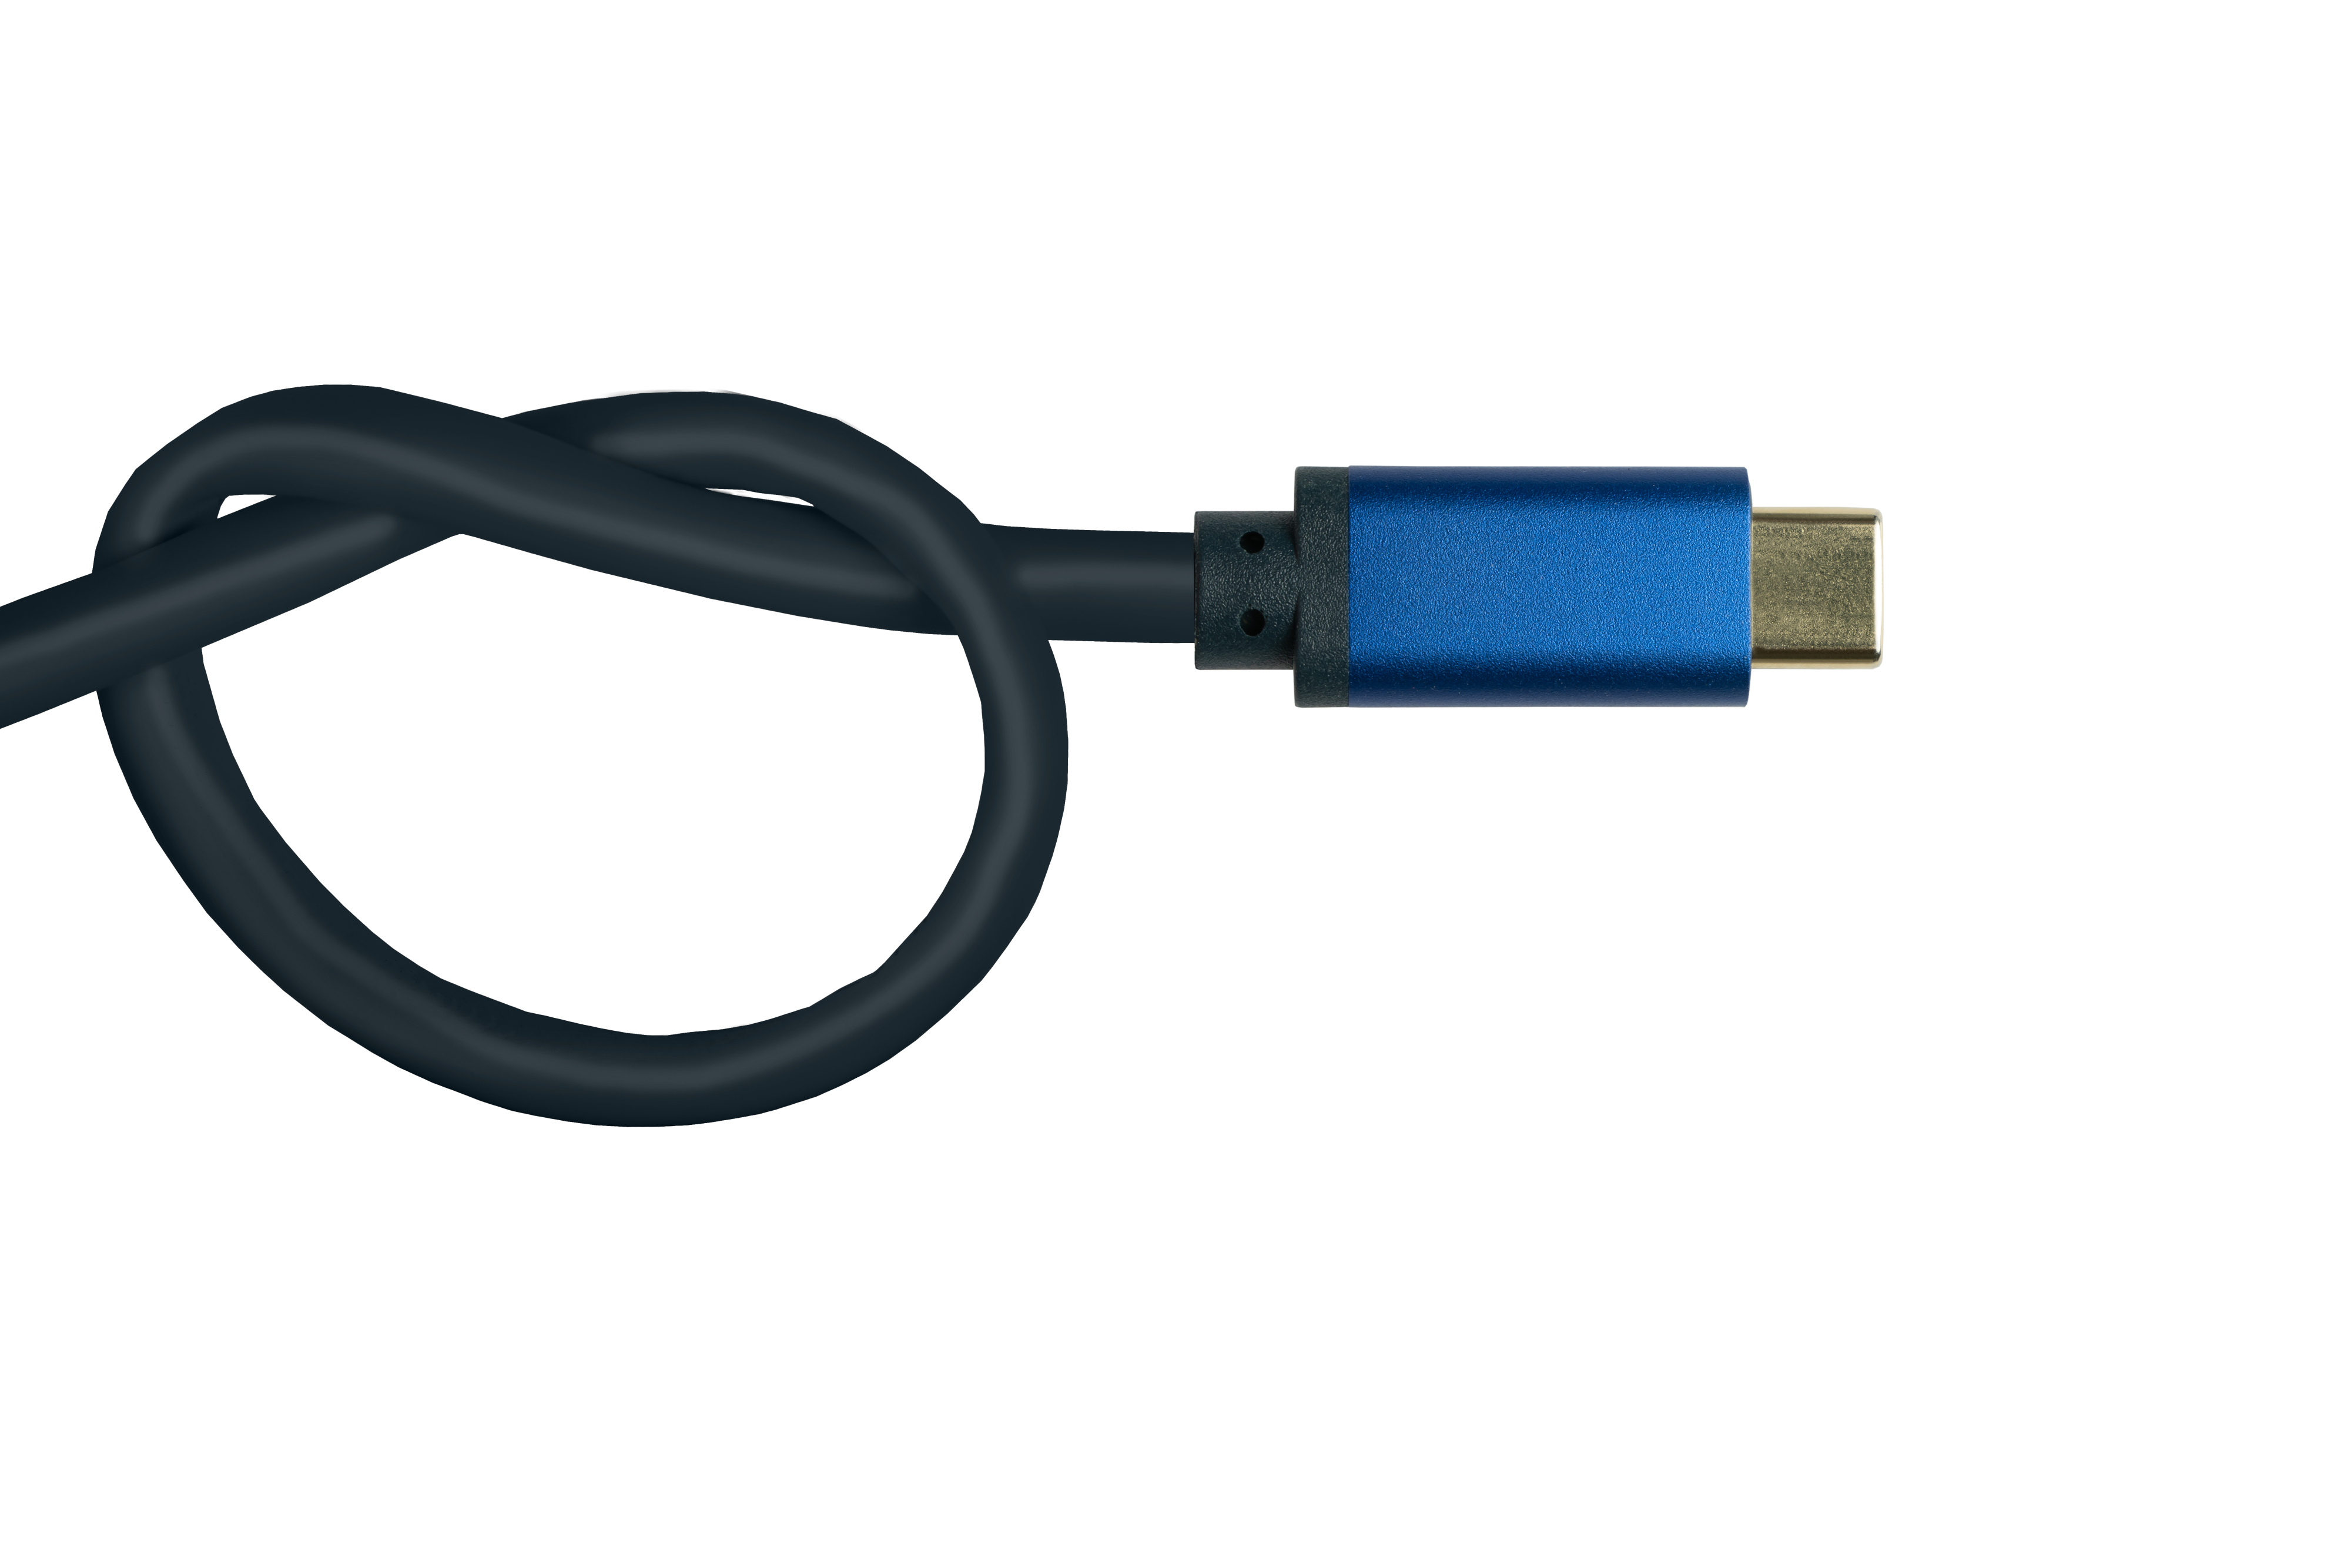 GOOD CONNECTIONS 4K an 2.0b CU, USB-C™ Adapterkabel HDMI @60Hz, Aluminiumgehäuse, dunkelblau Kabel, UHD SmartFLEX